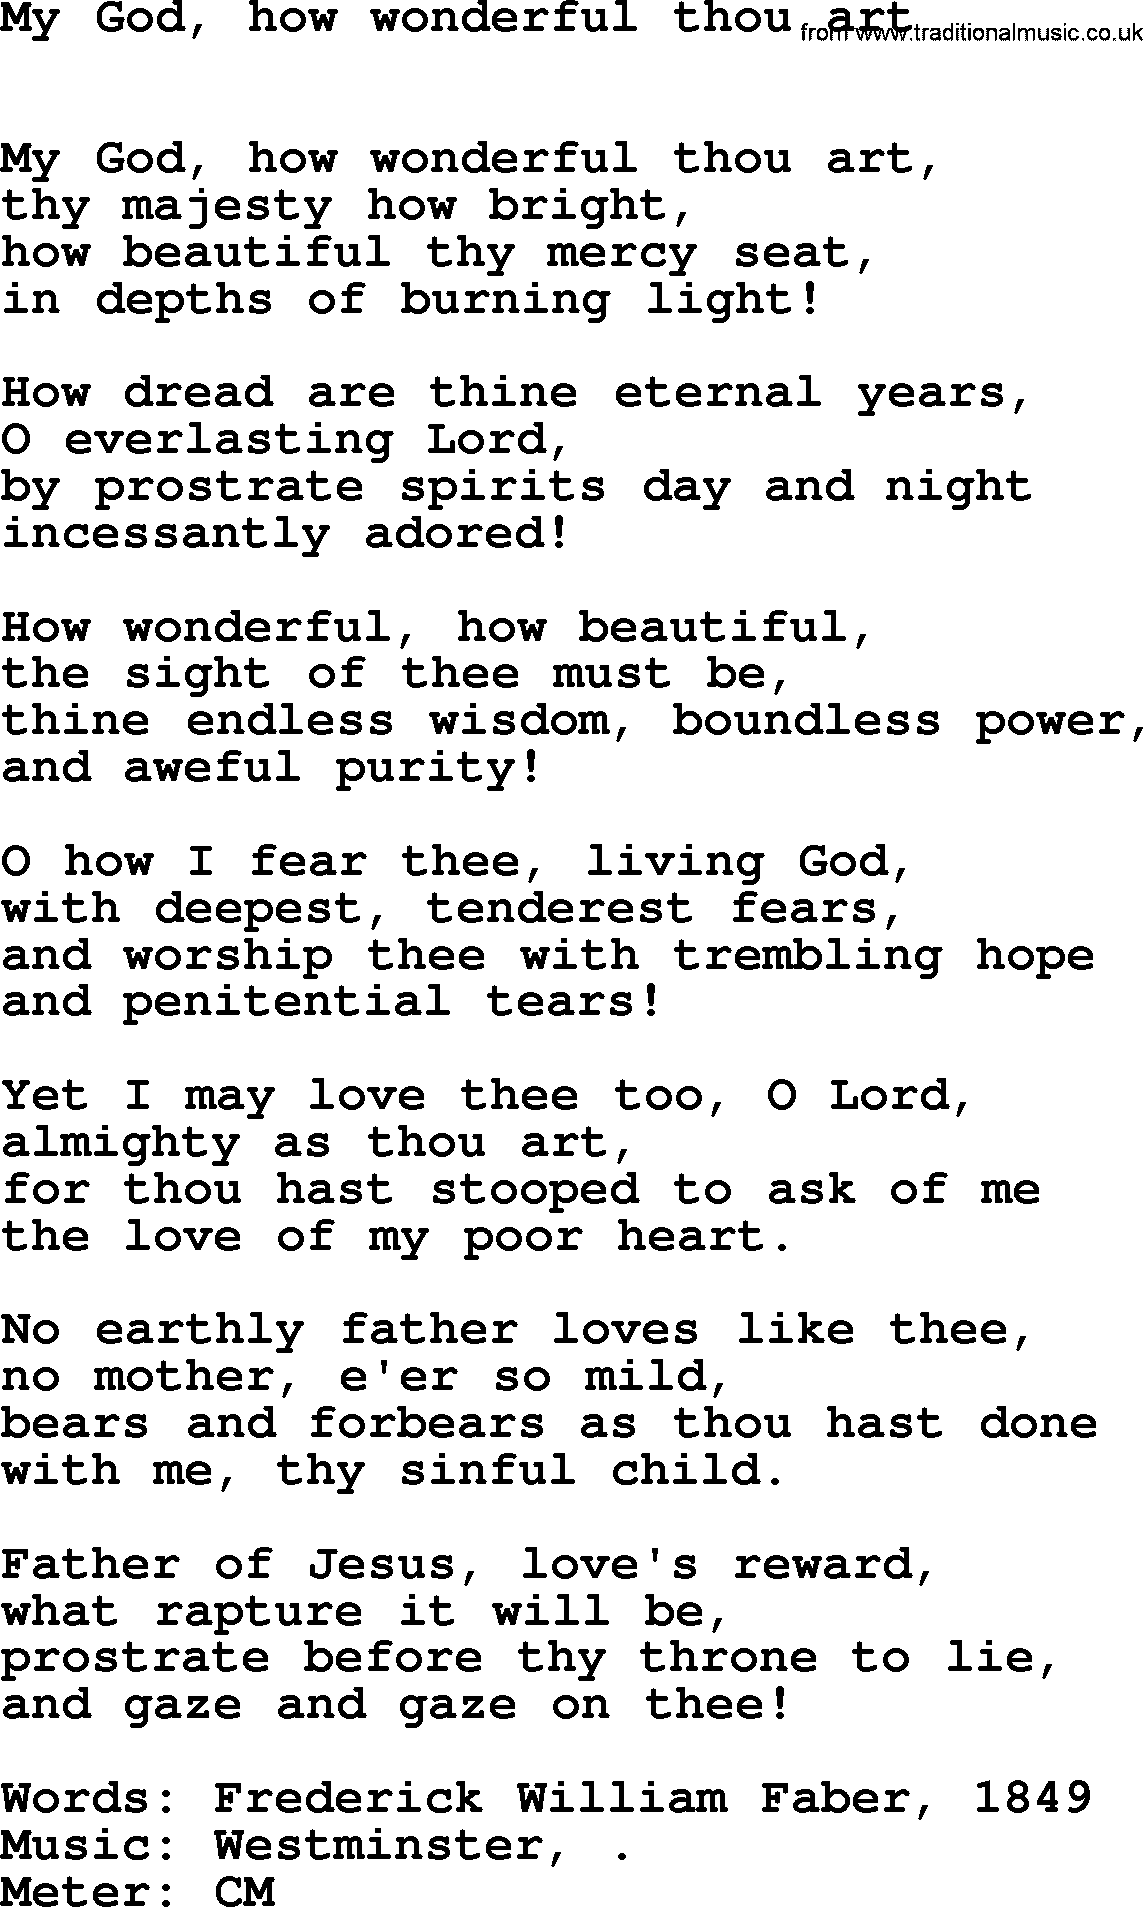 Book of Common Praise Hymn: My God, How Wonderful Thou Art.txt lyrics with midi music